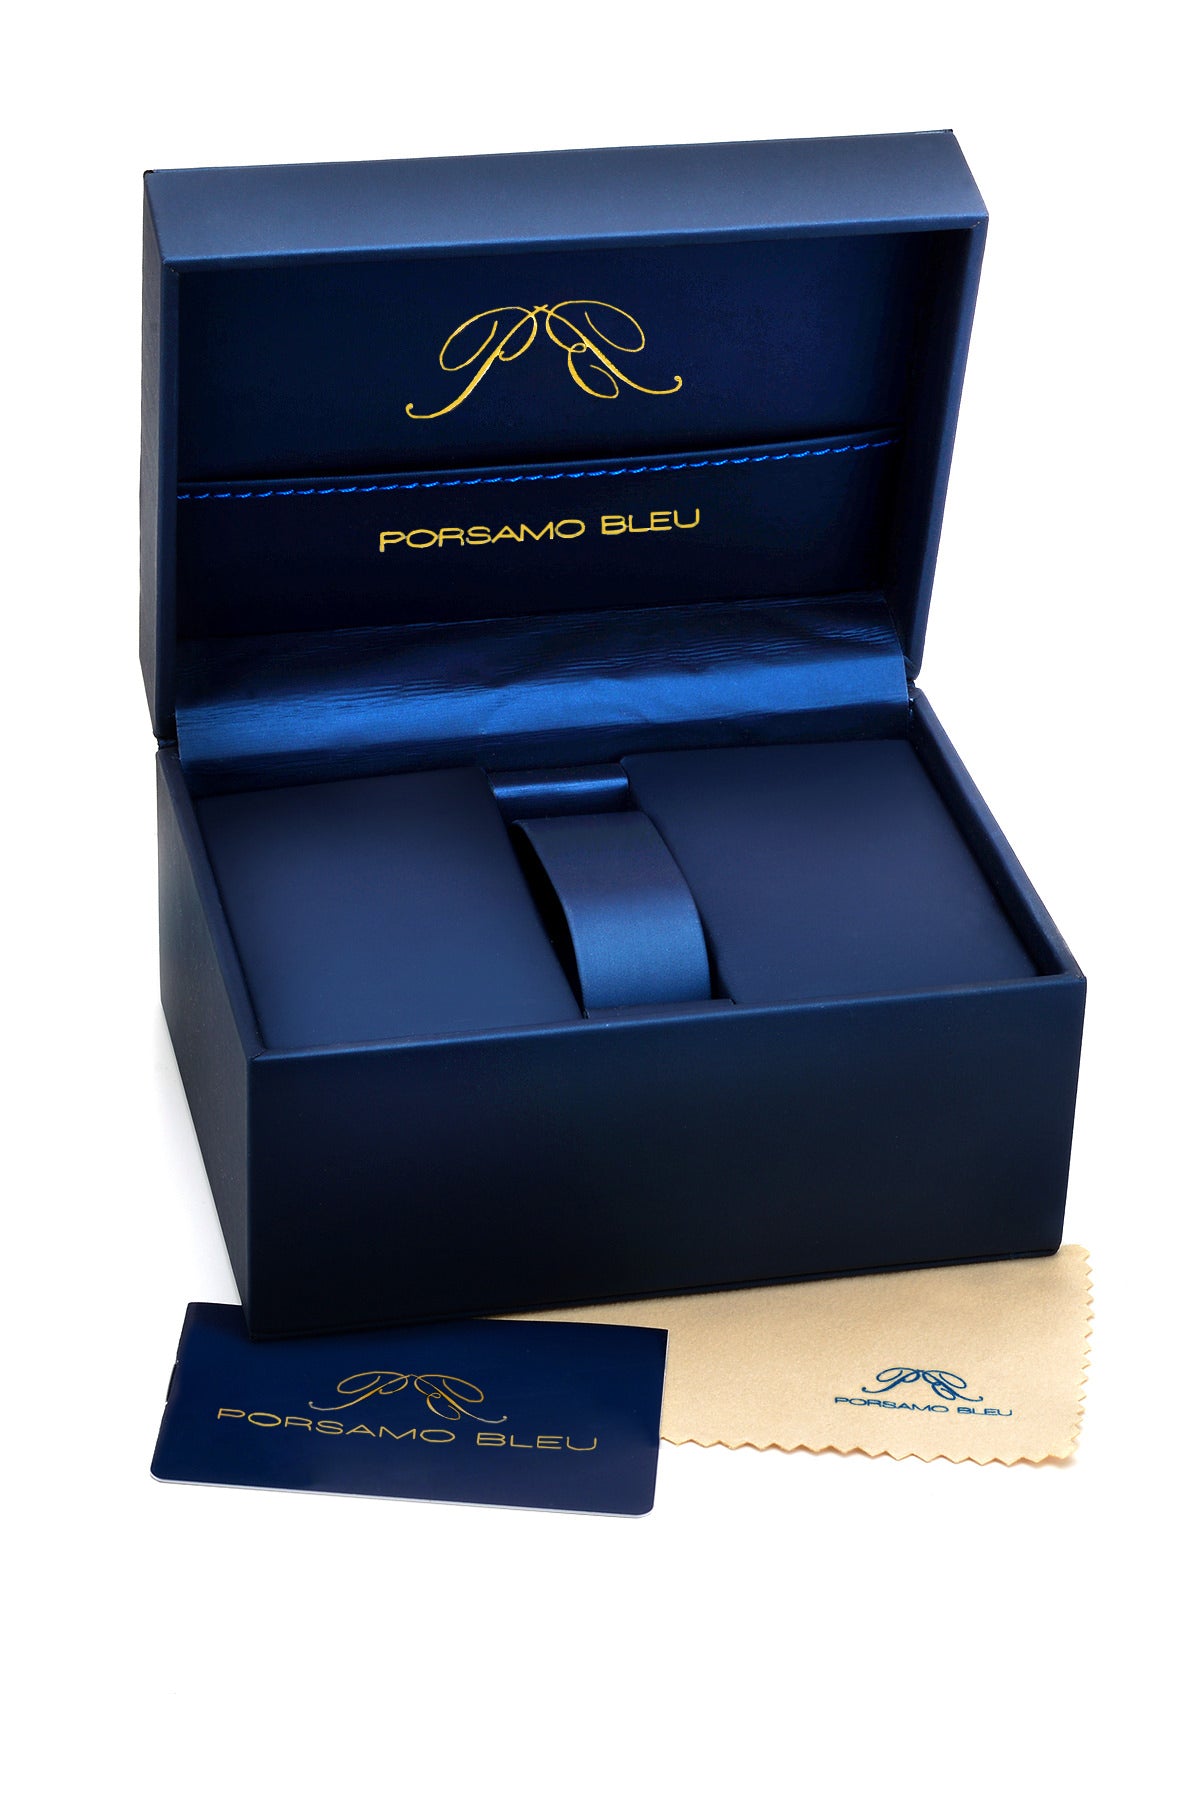 Porsamo Bleu Sydney G luxury men's watch, genuine leather band, silver, black 233ASGL